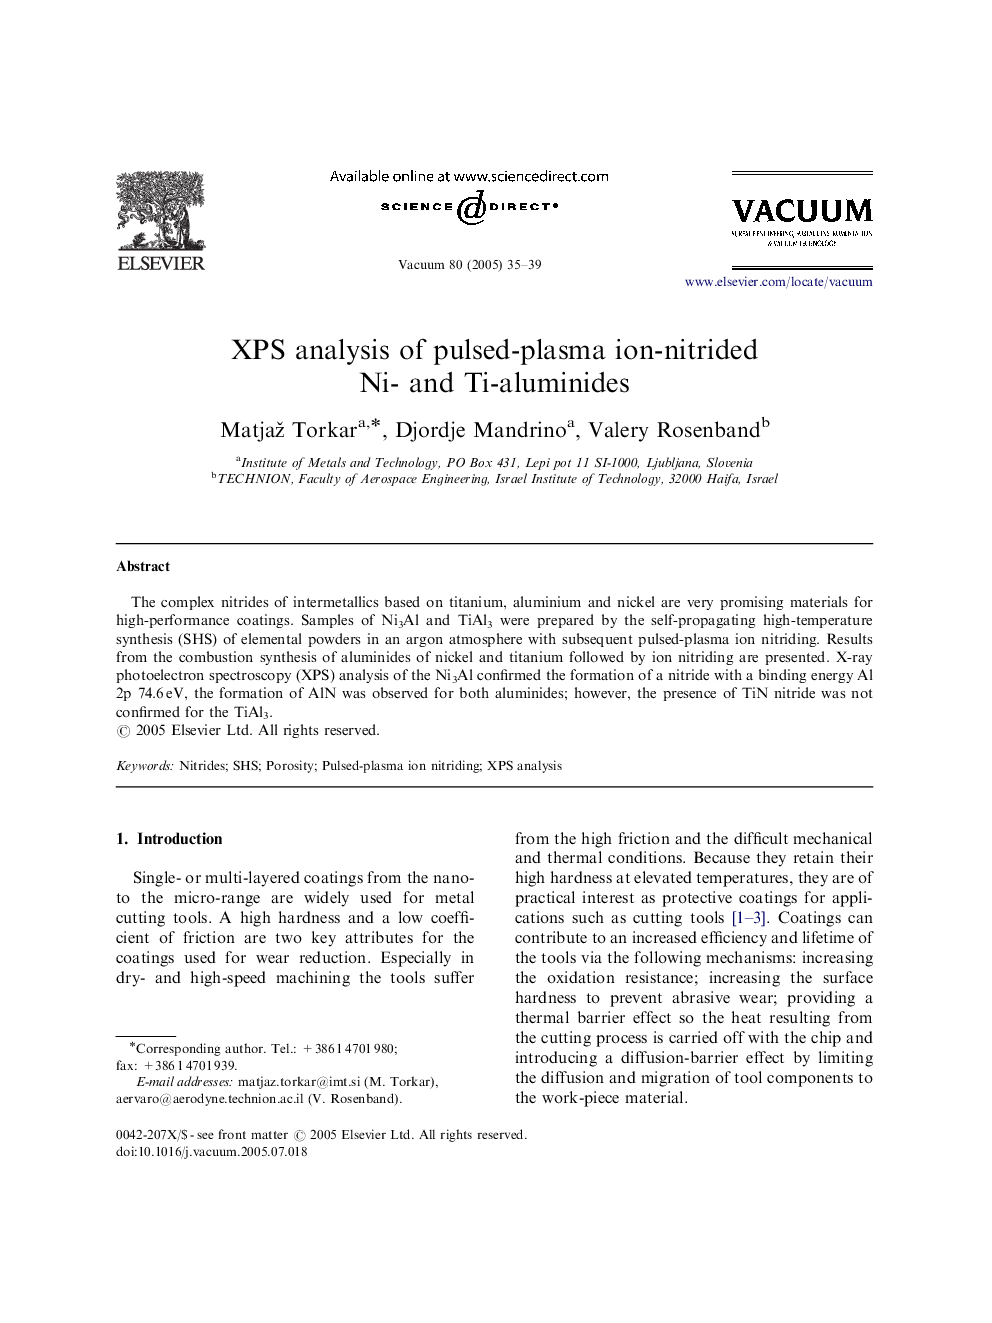 XPS analysis of pulsed-plasma ion-nitrided Ni- and Ti-aluminides